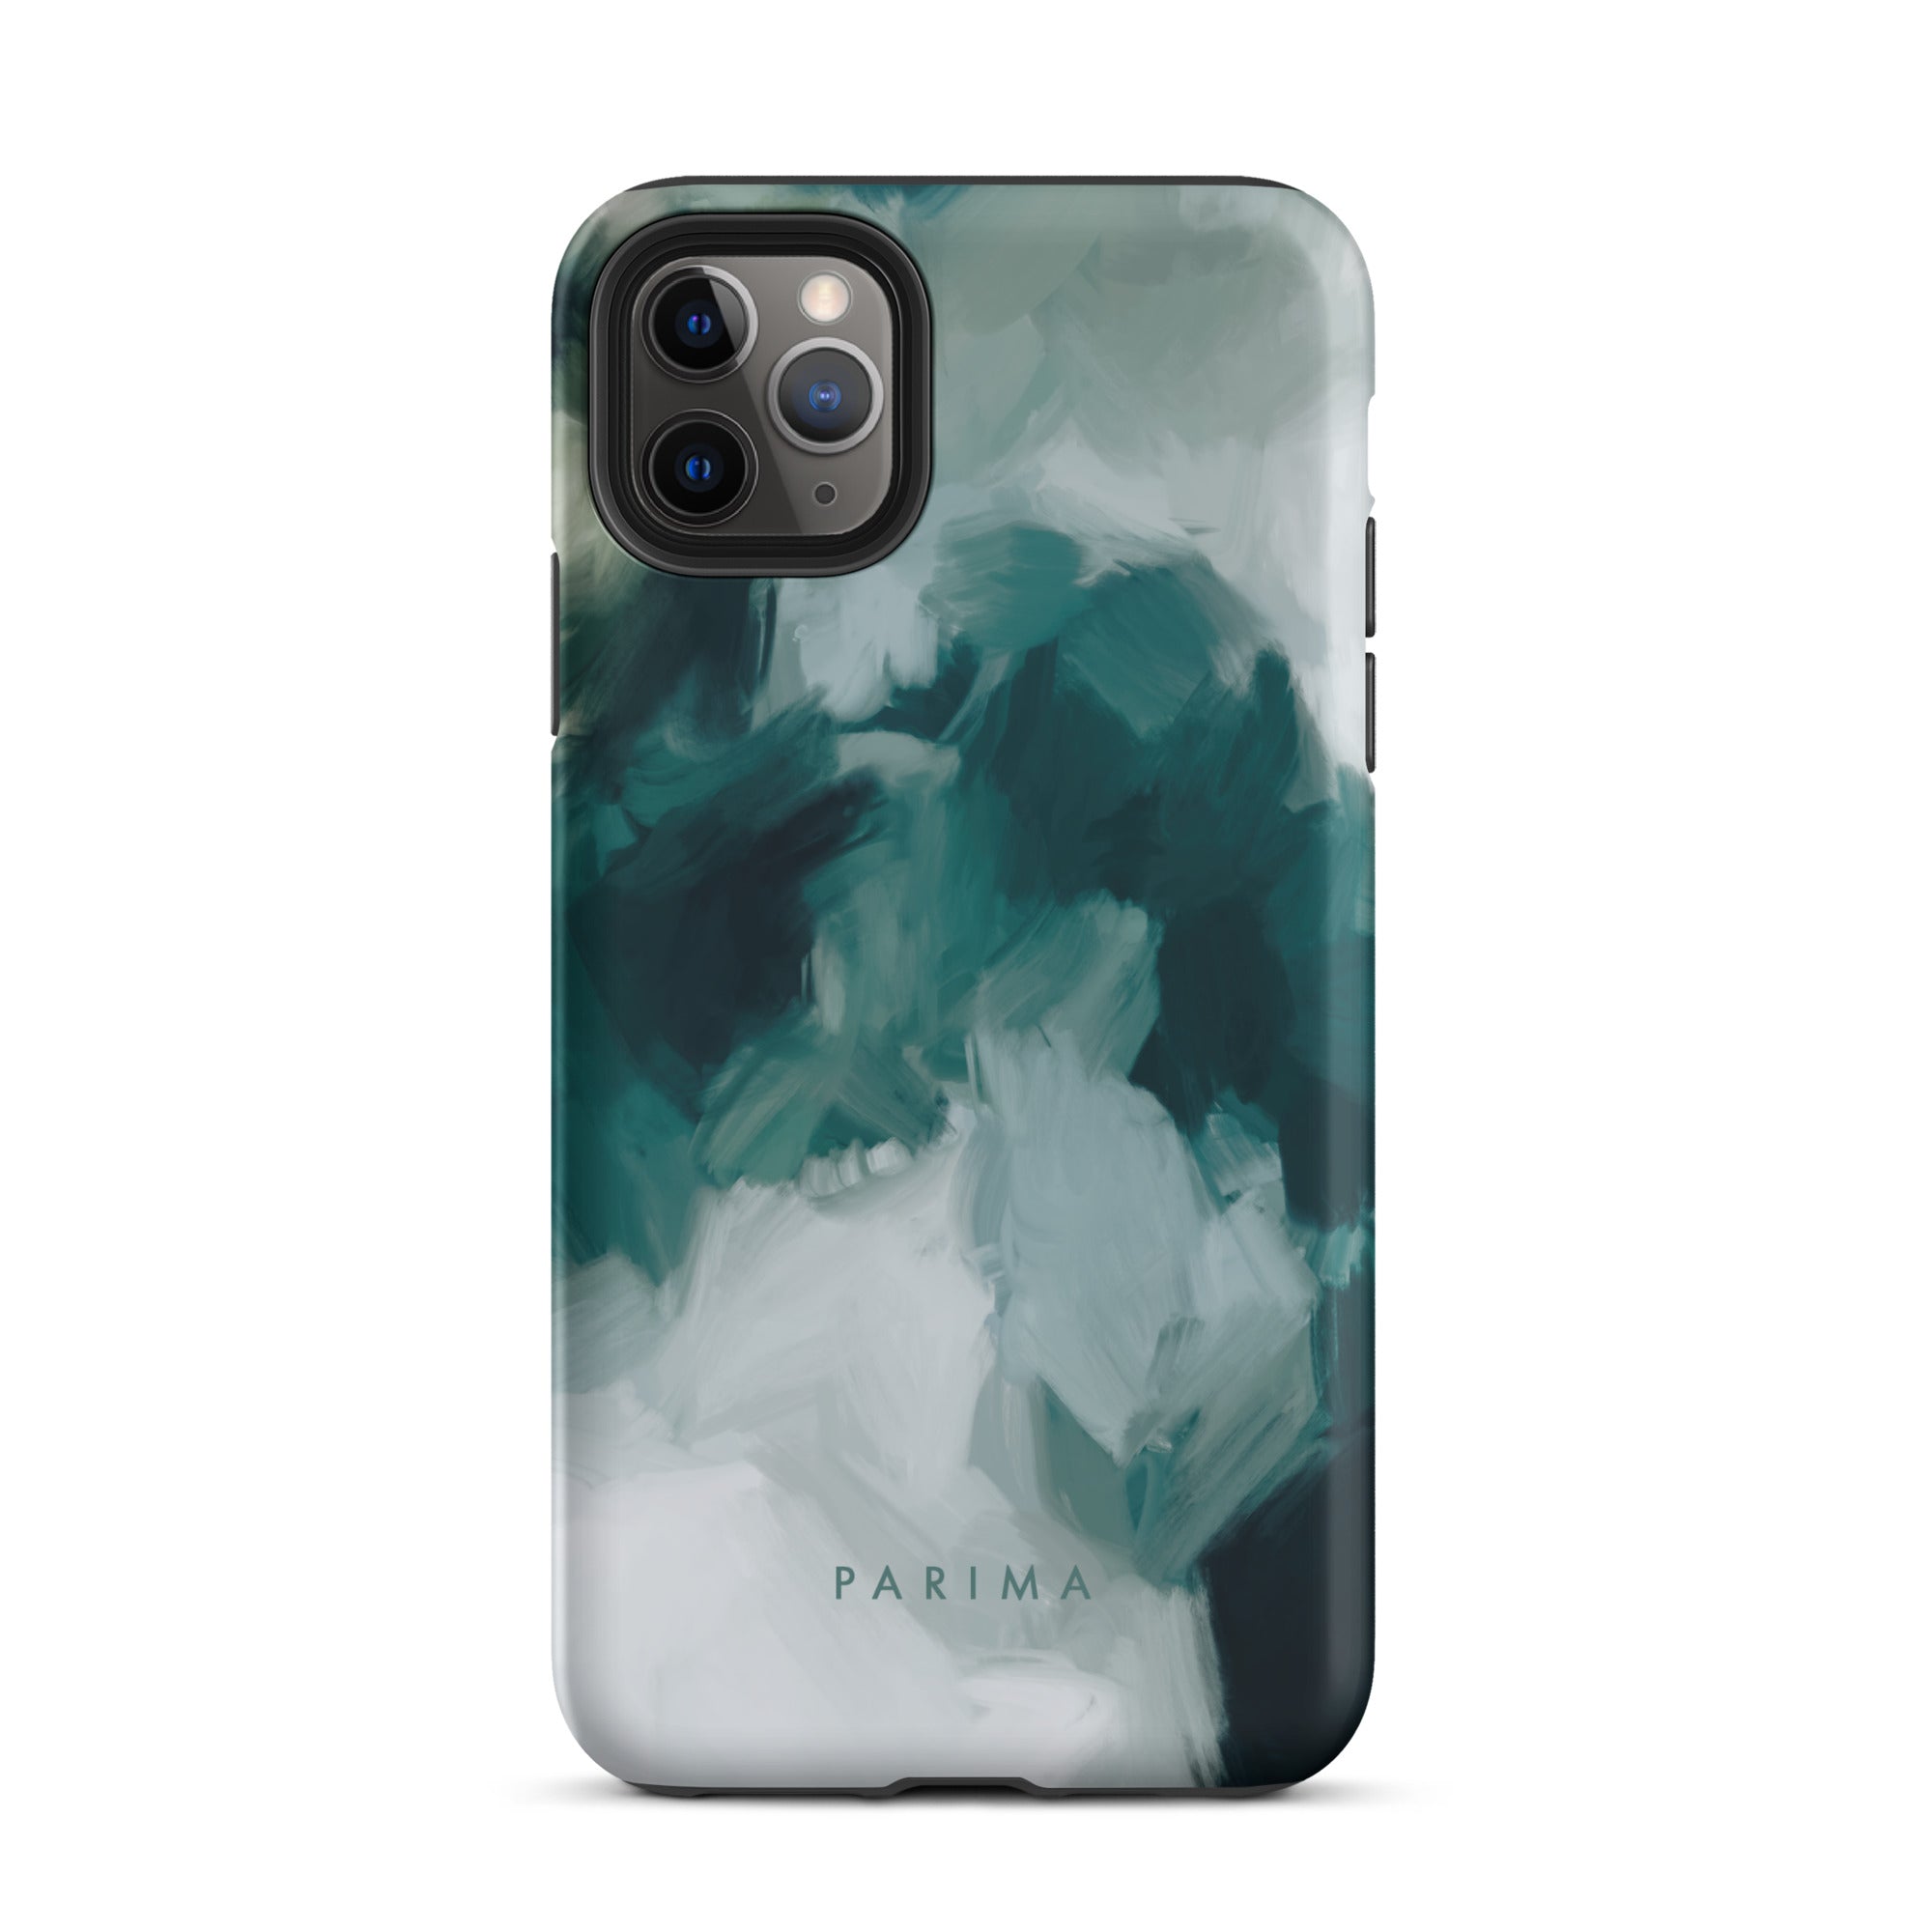 Echo, emerald green abstract art - iPhone 11 Pro Max tough case by Parima Studio